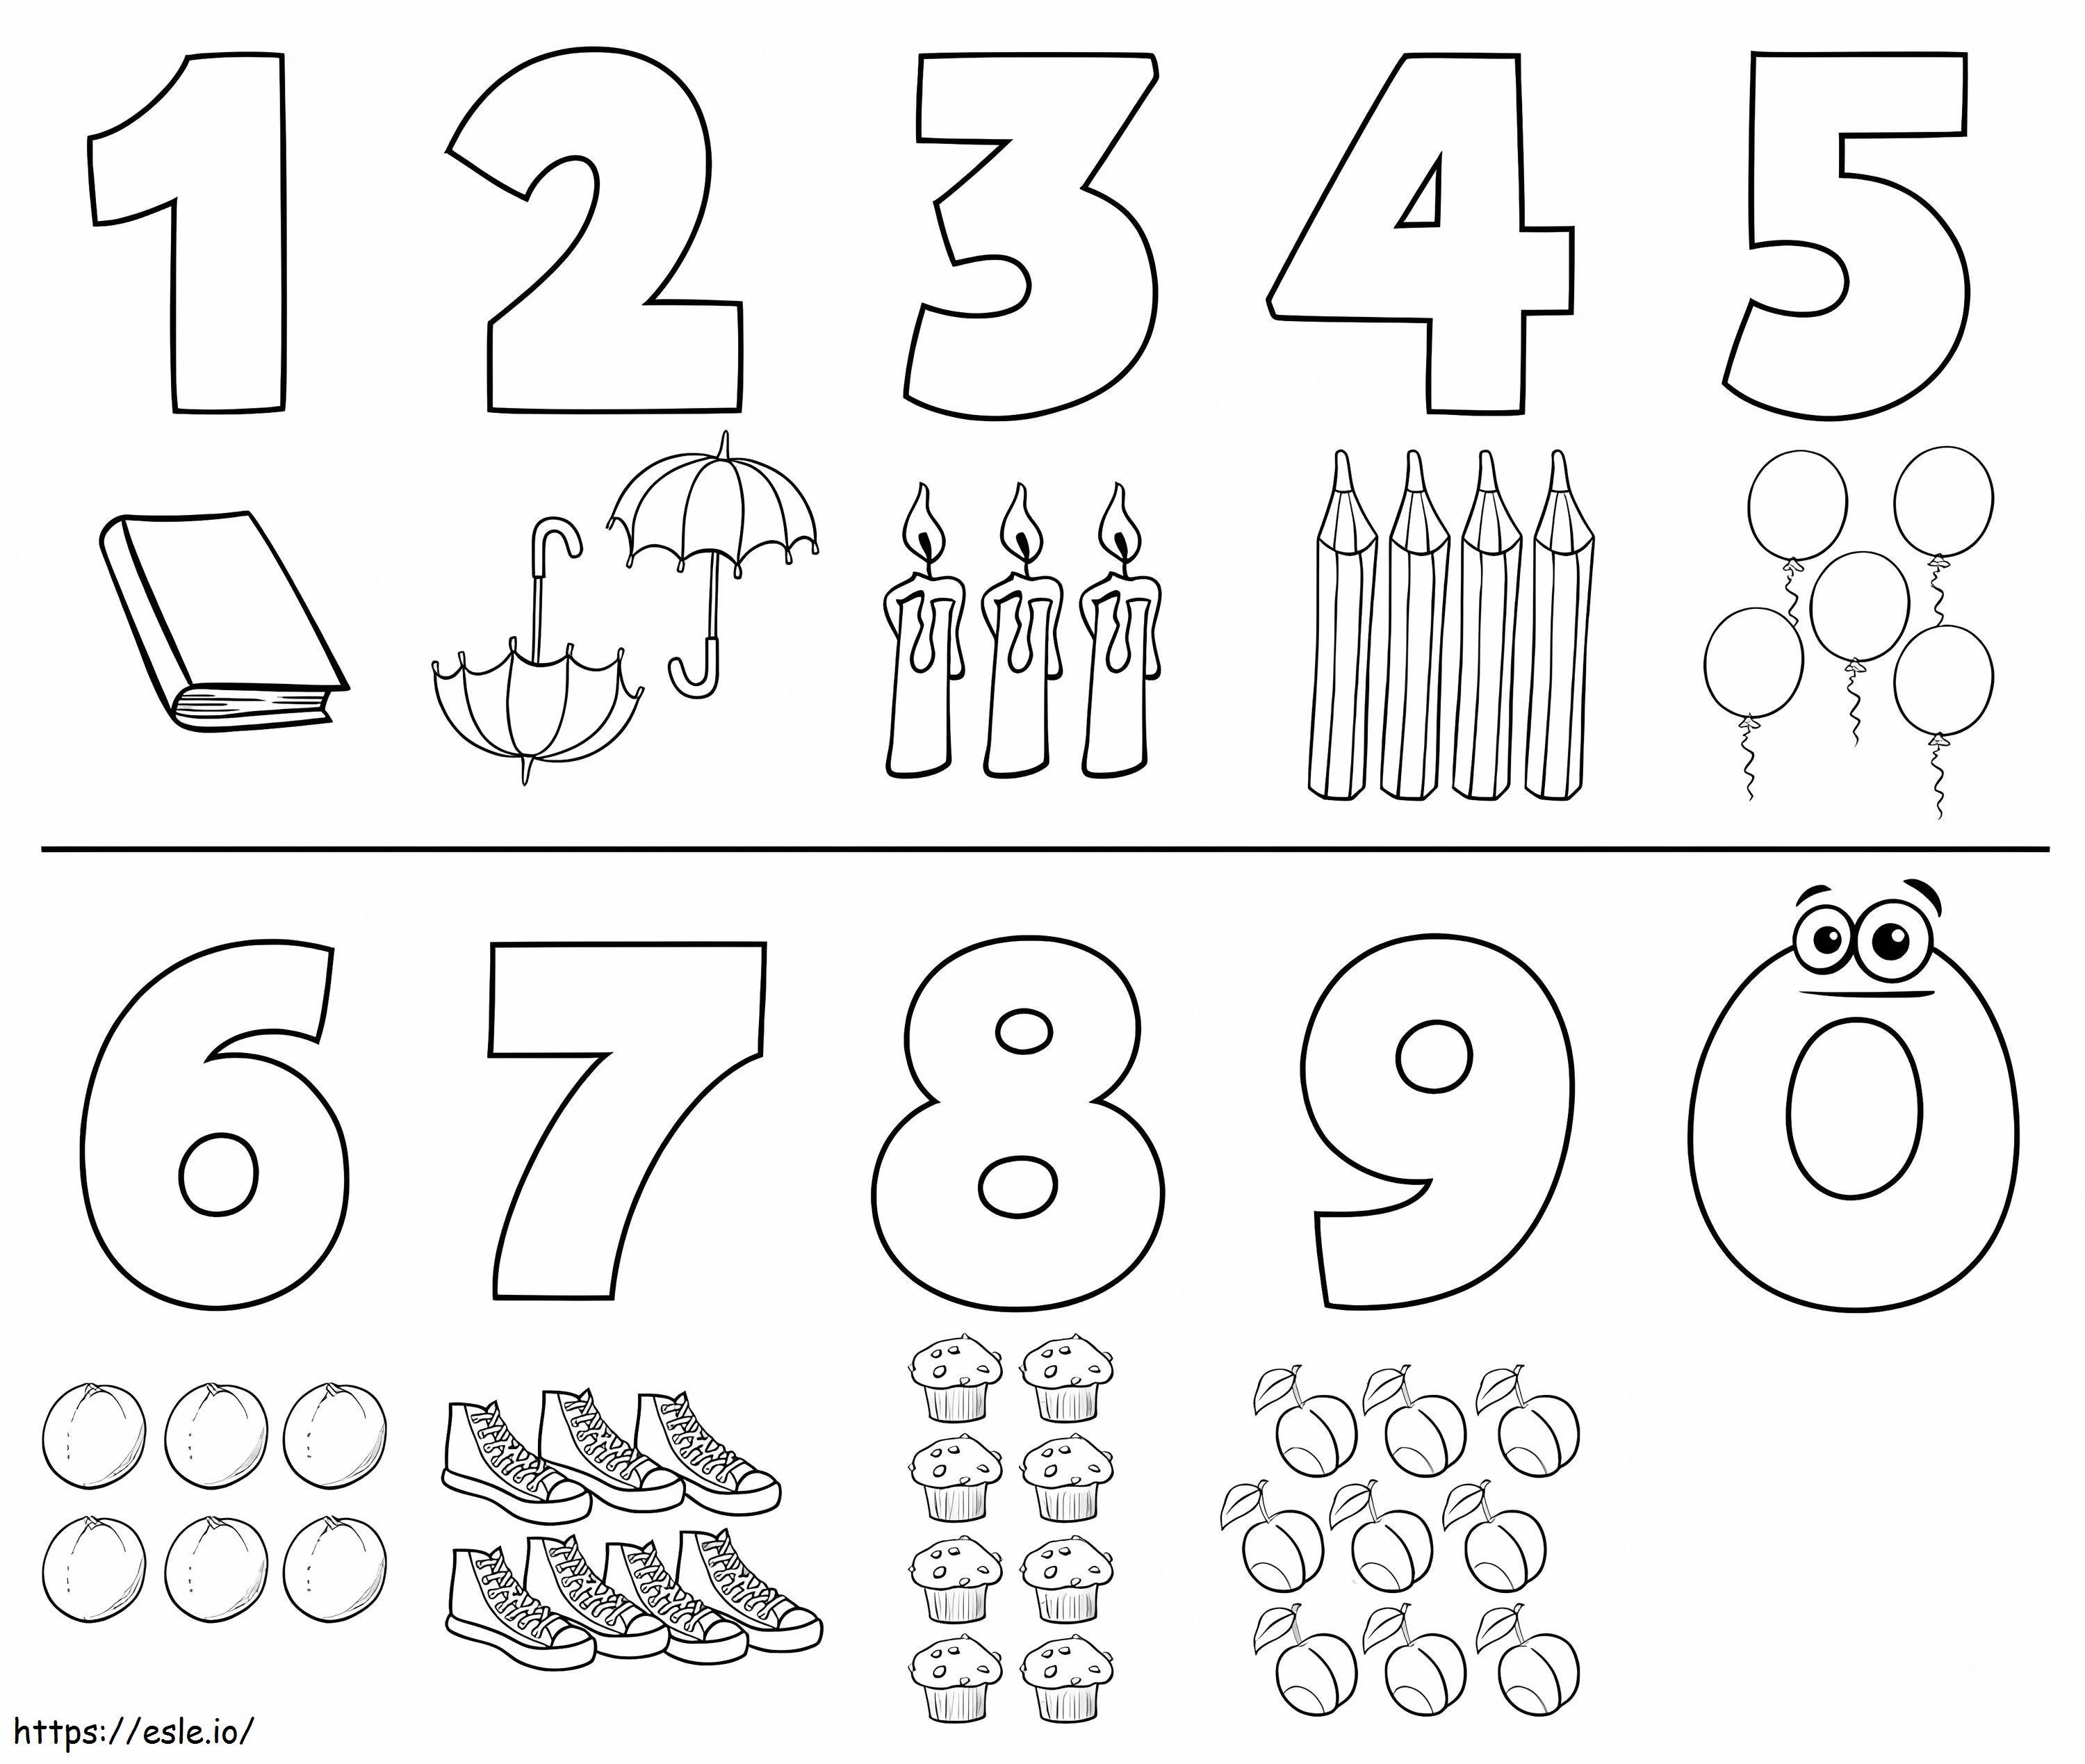 Imagens de números de 0 a 9 para colorir